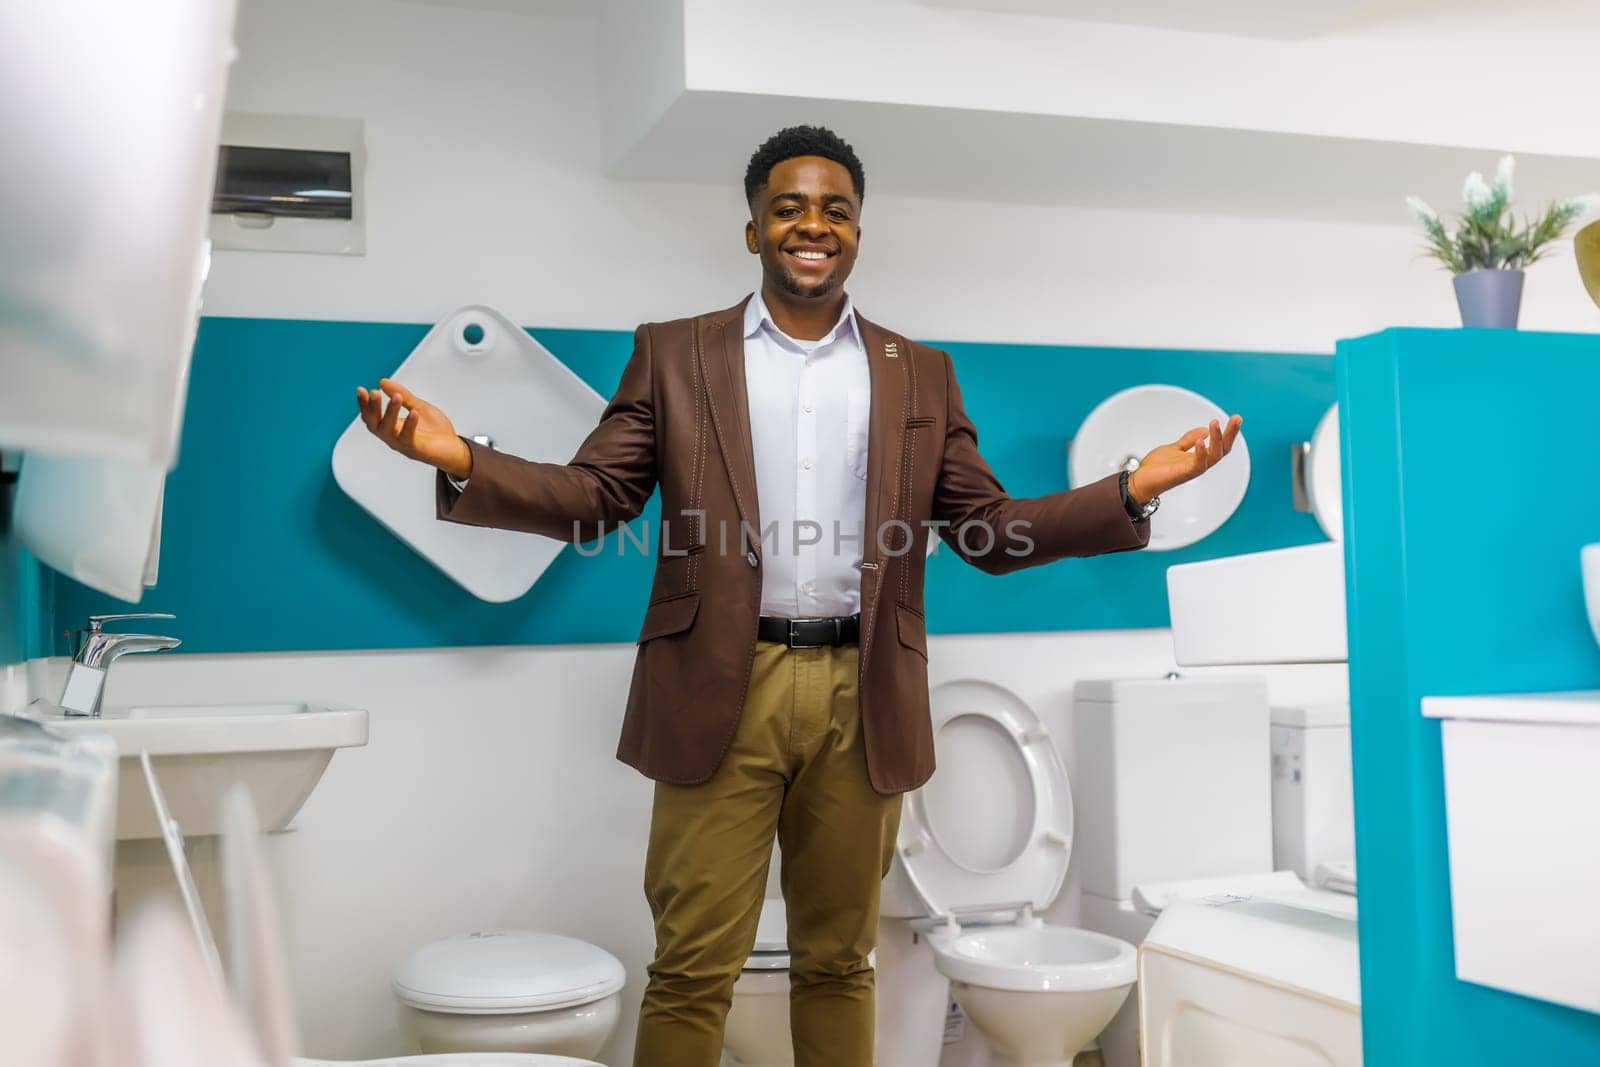 Portrait of salesperson in bathroom store by djoronimo